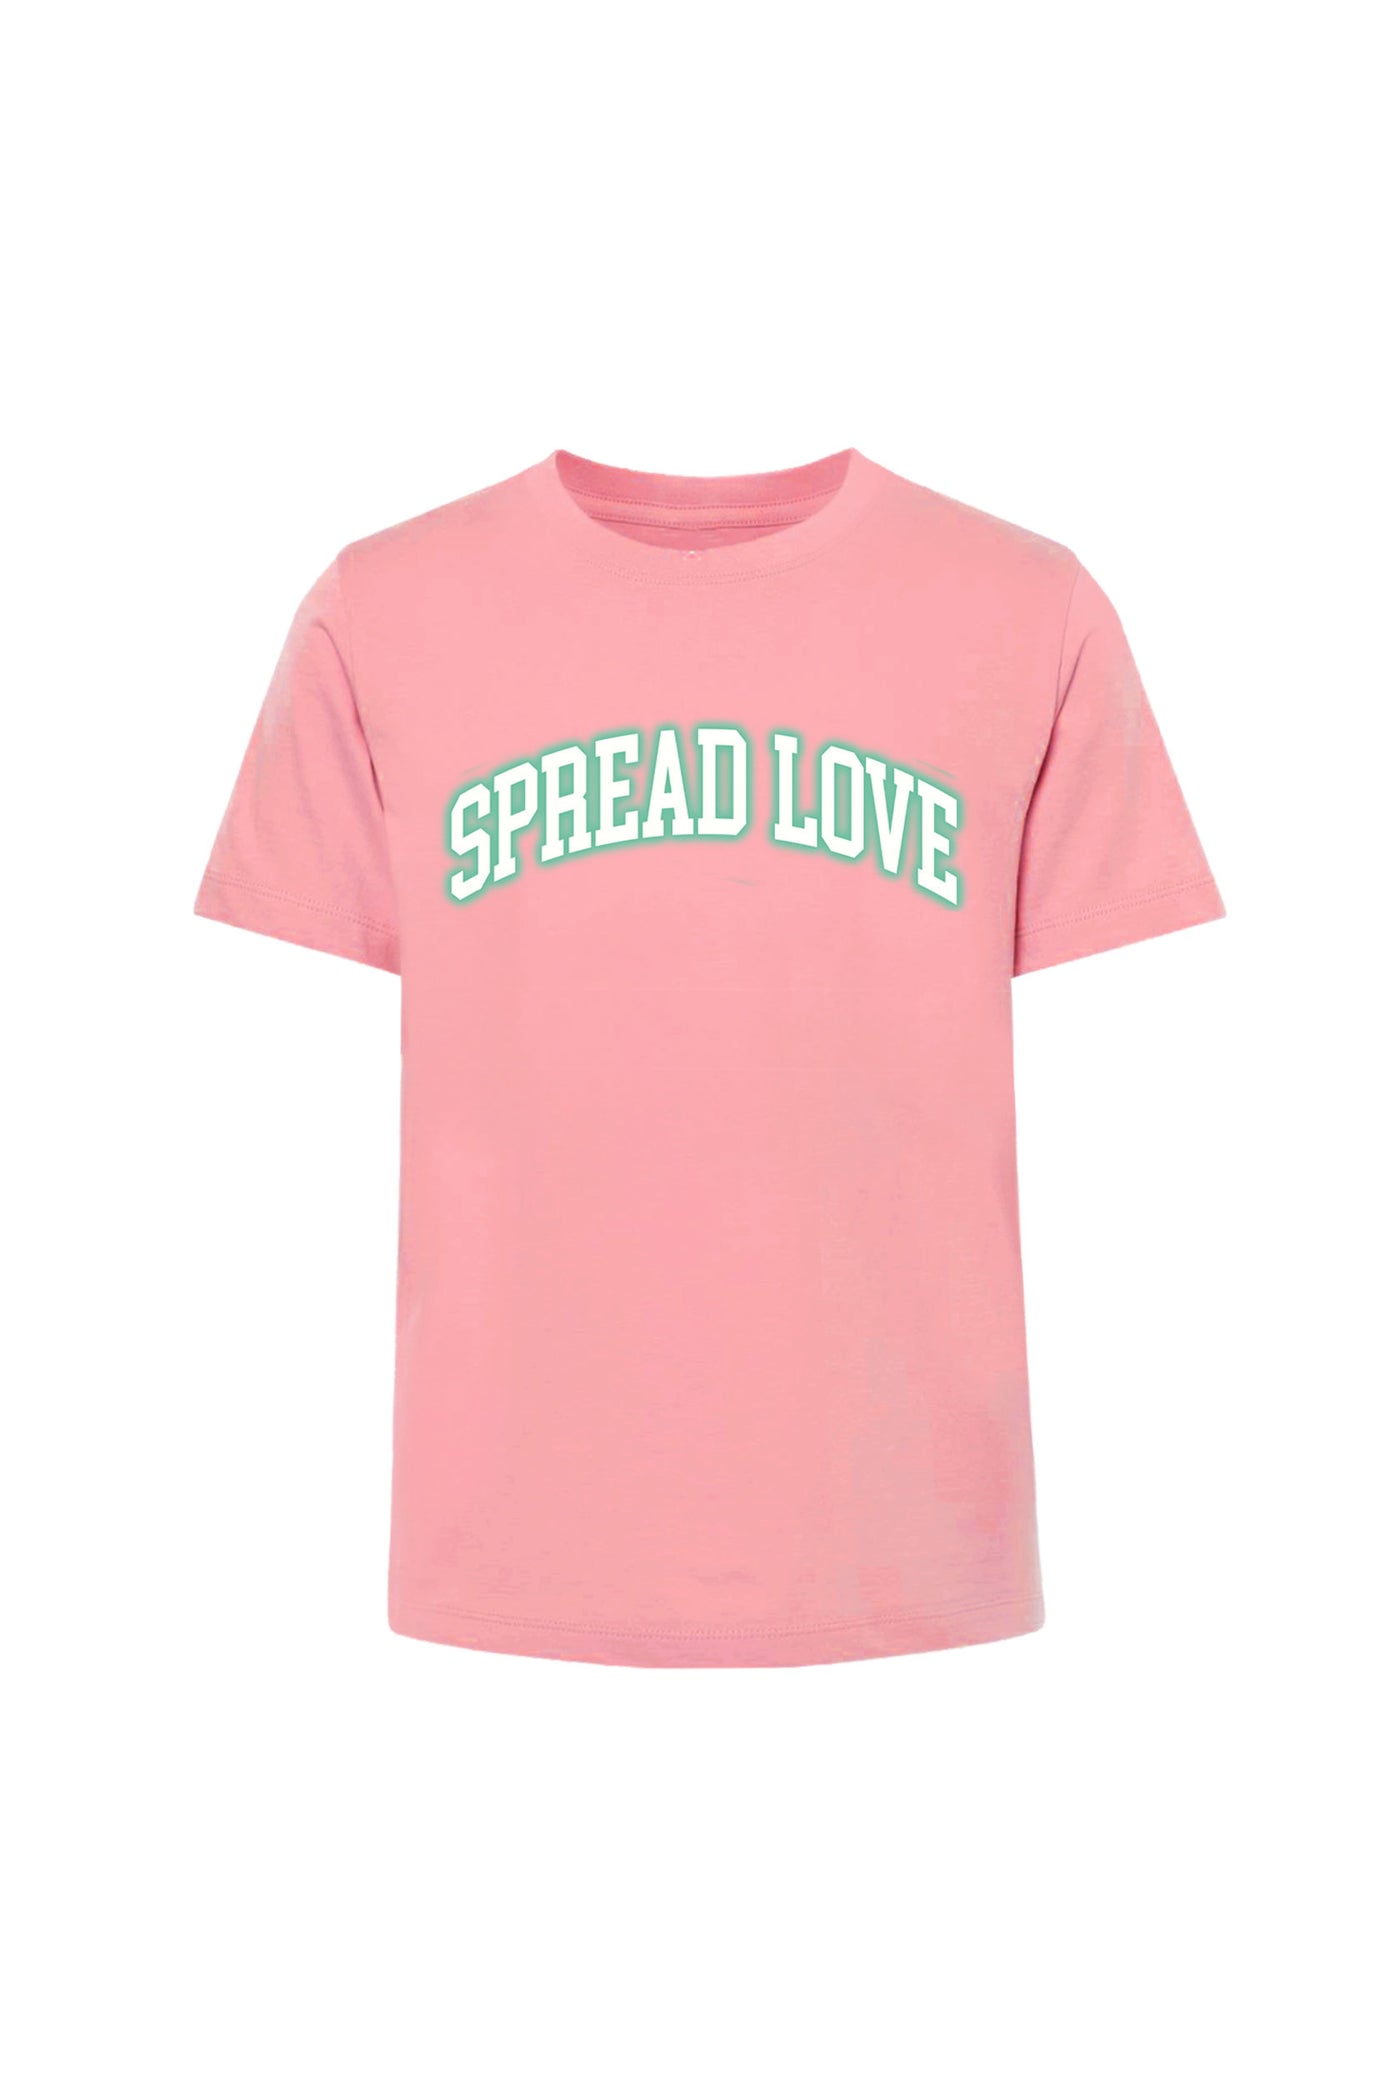 Spread Love T-shirt, Boys